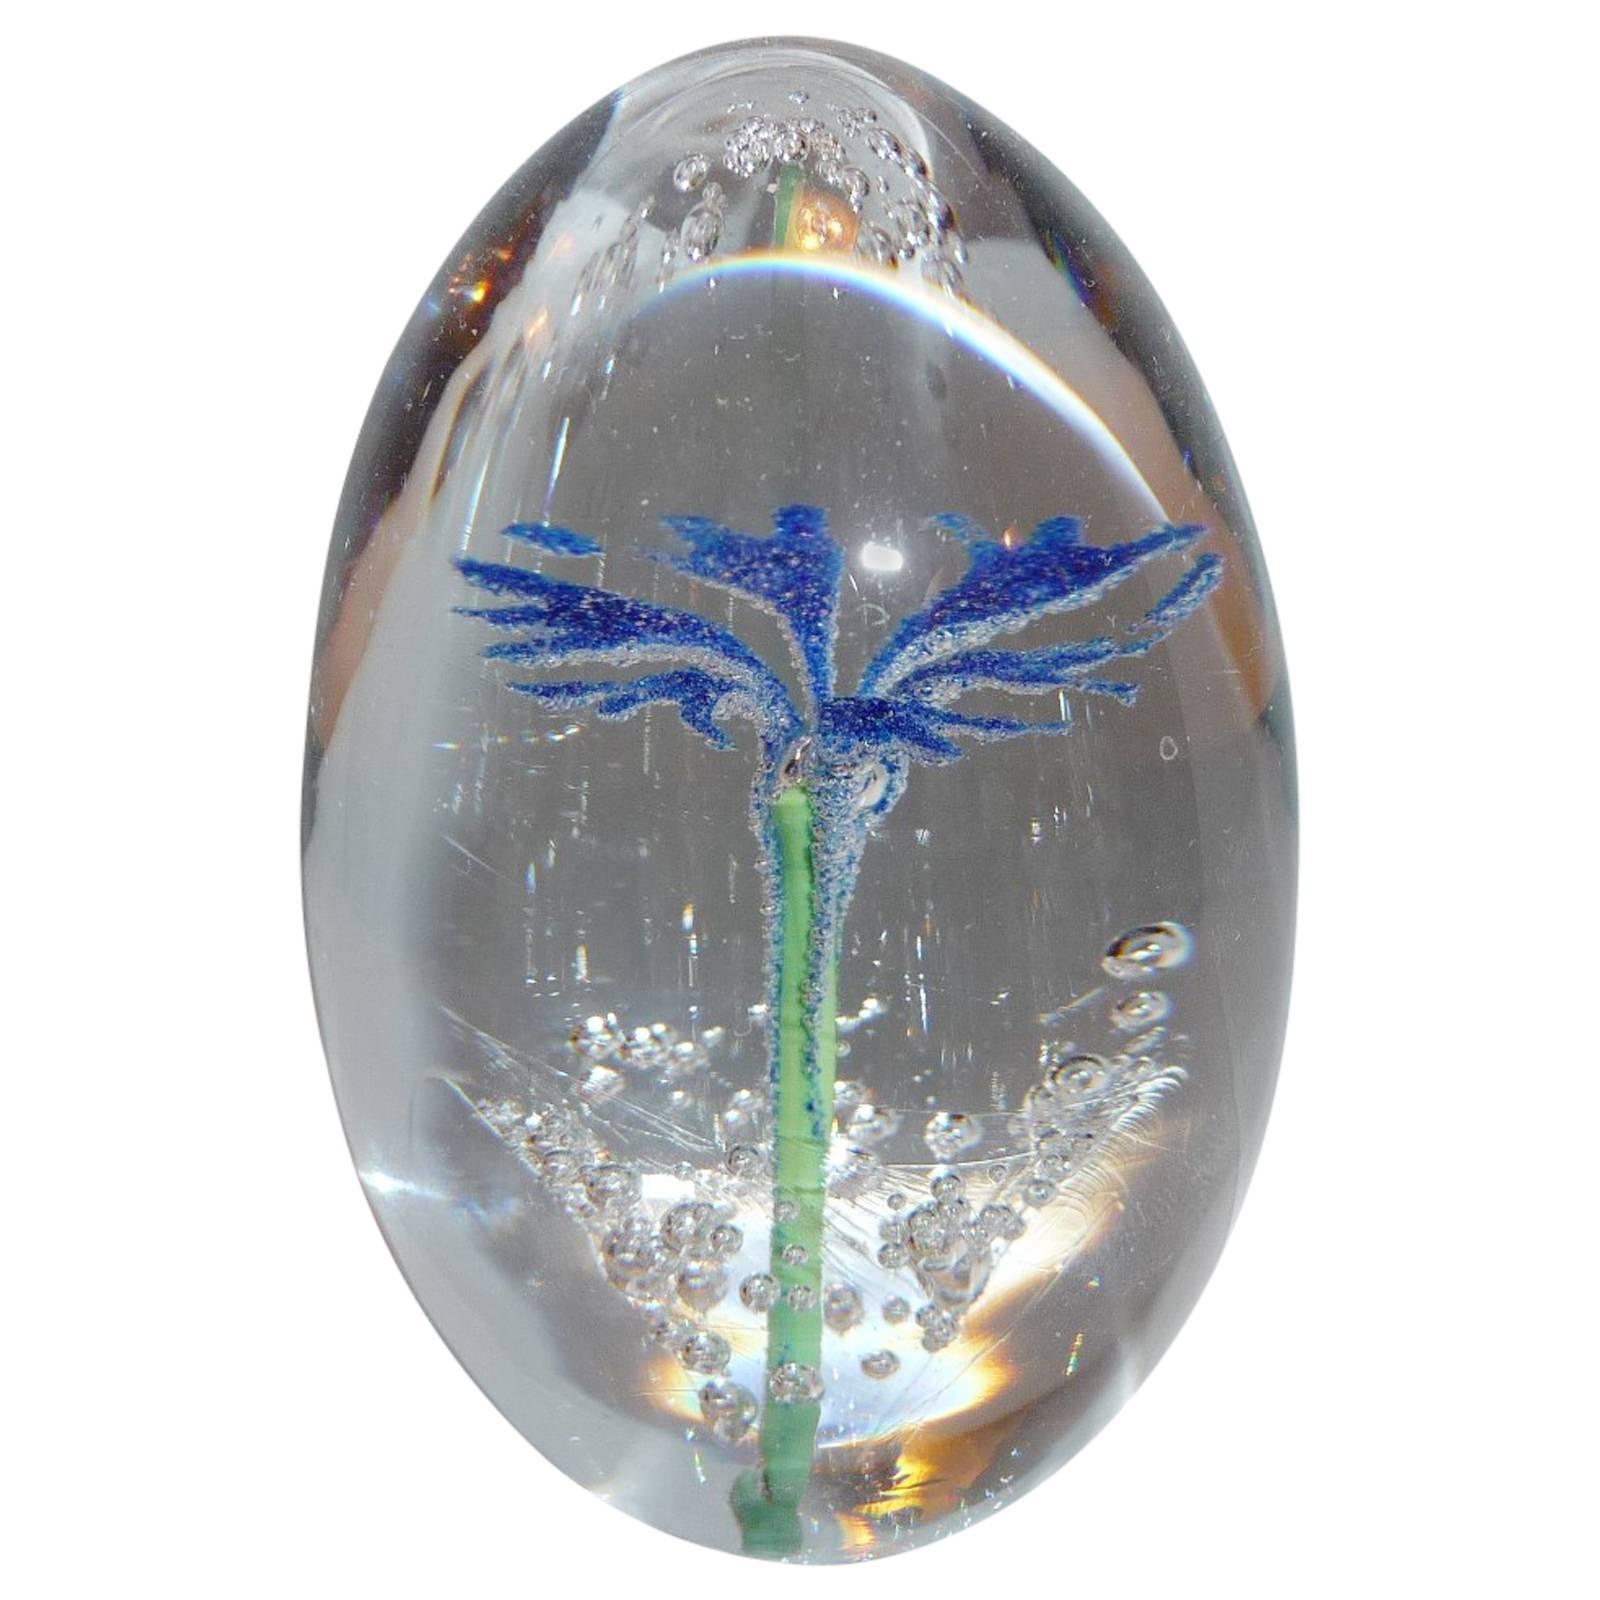 Paperweight Egg Daum Blue Flower For Sale